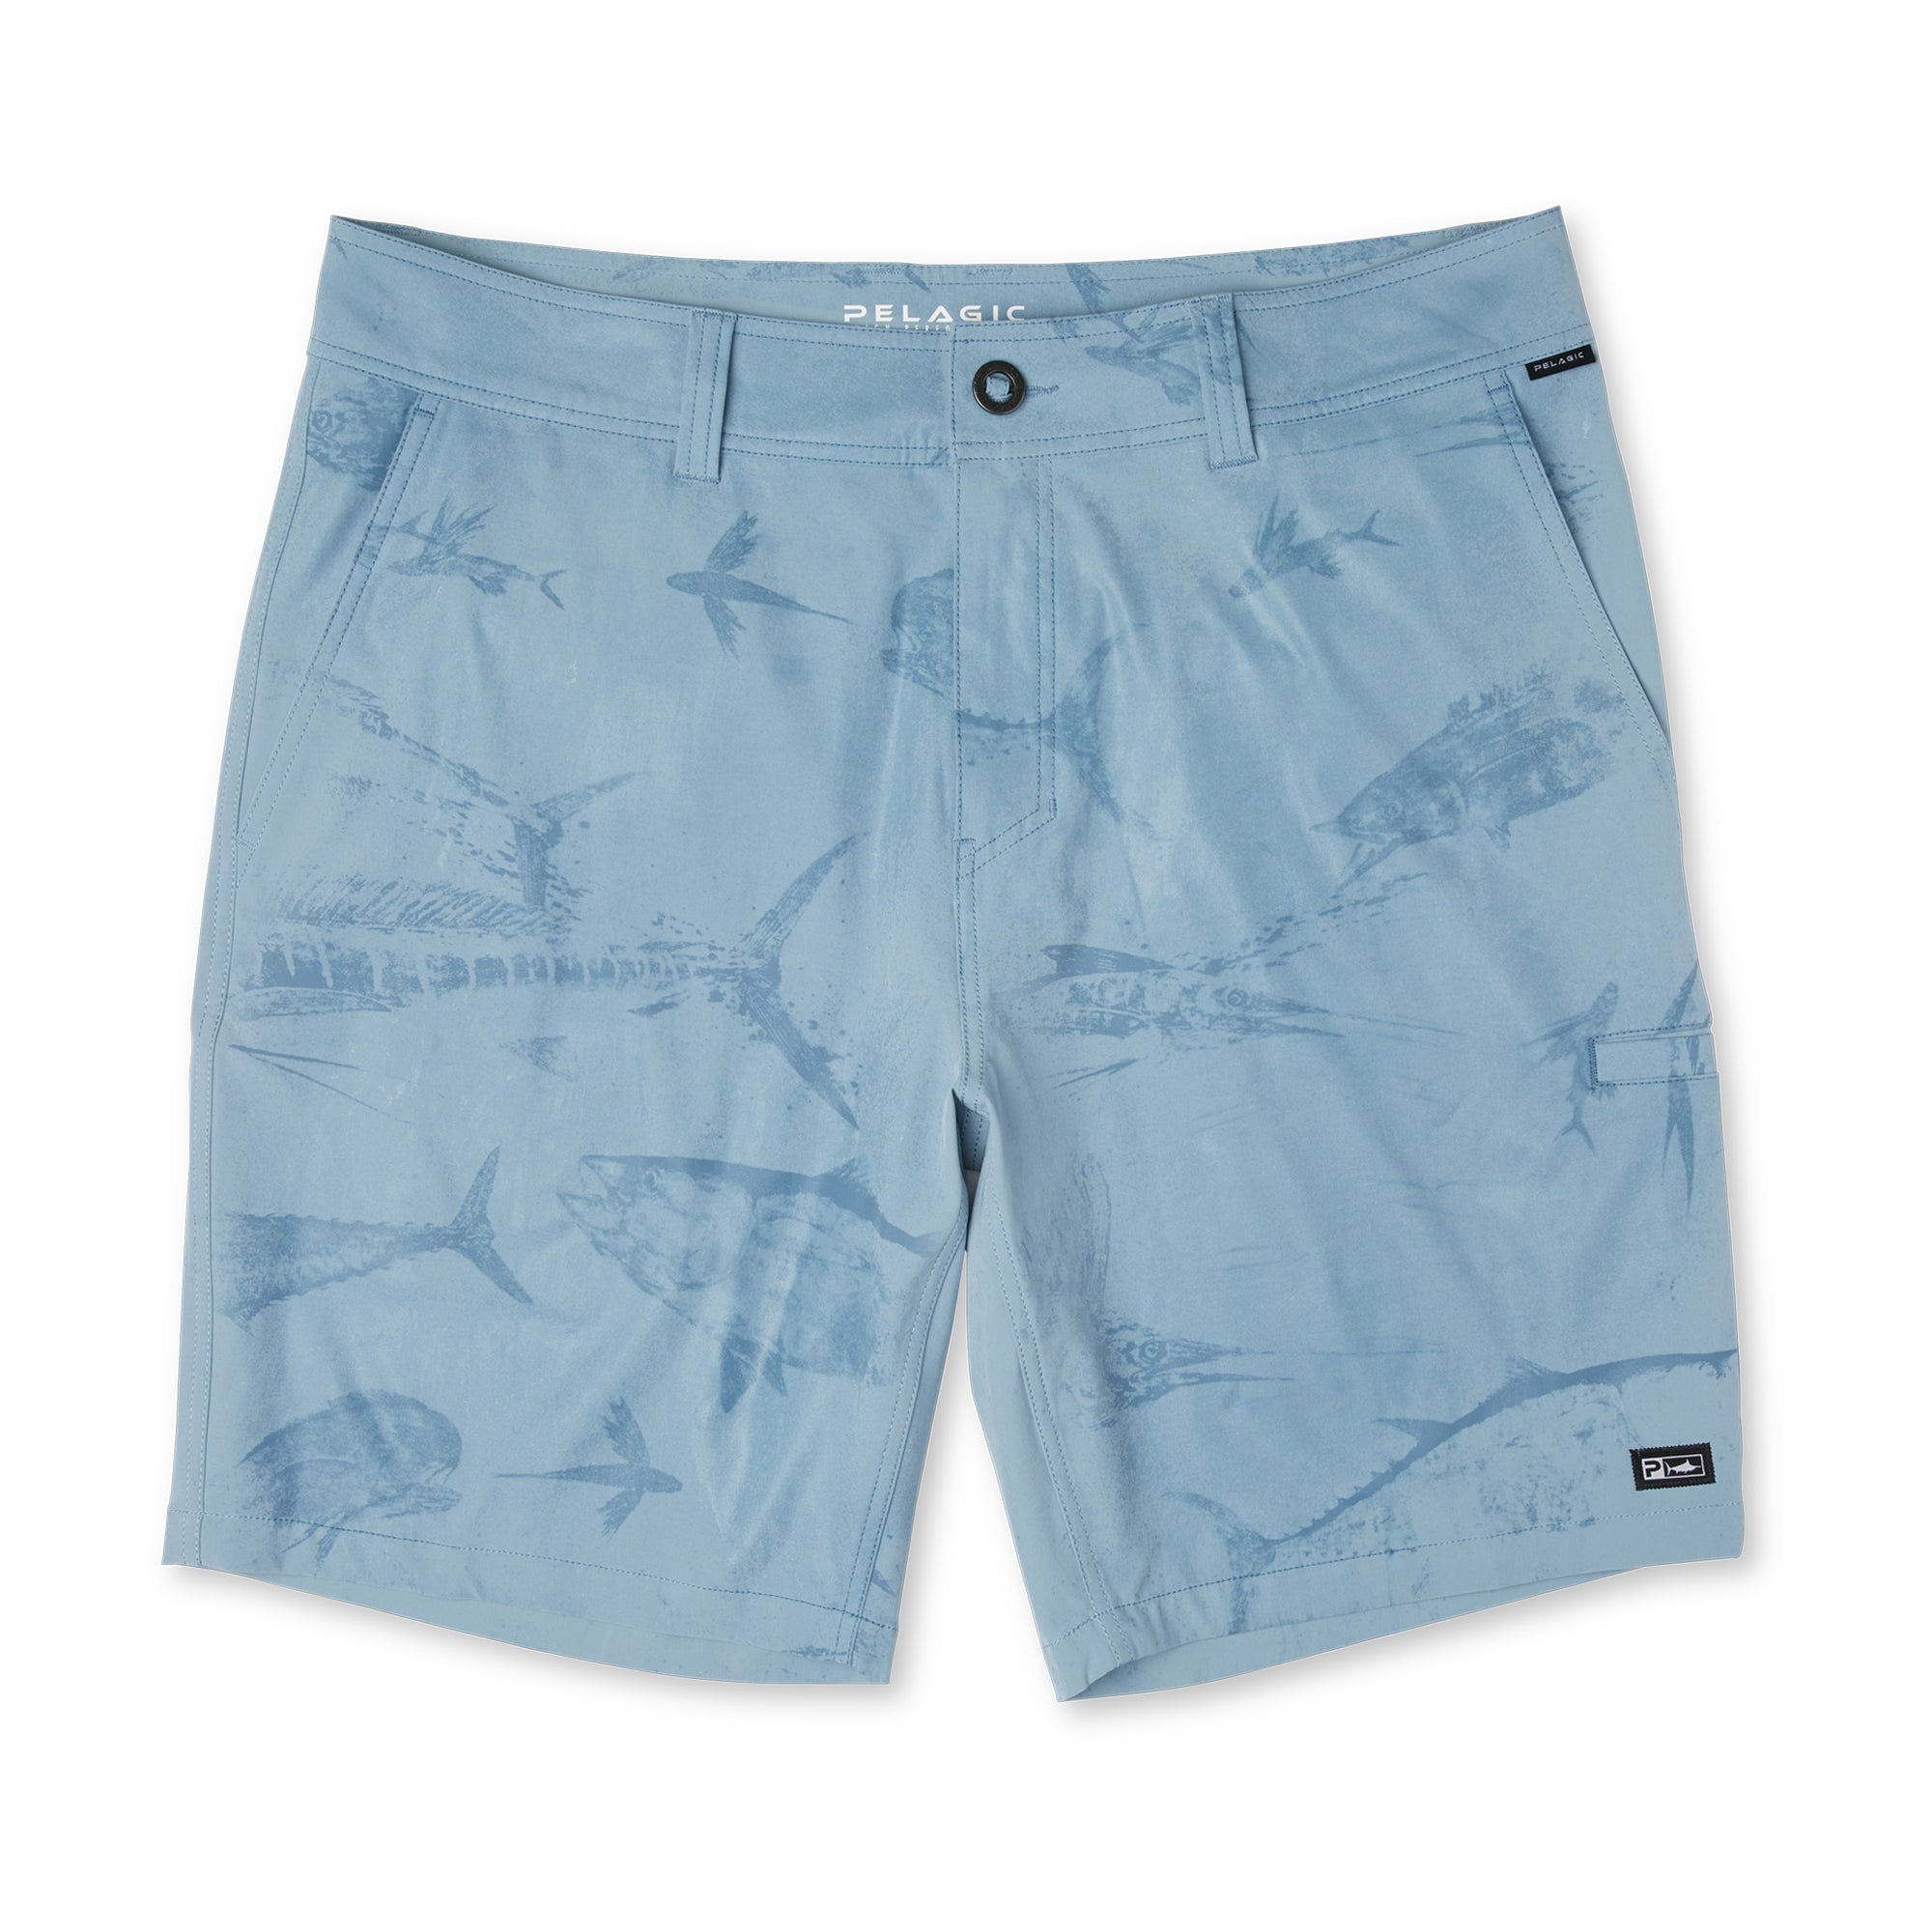 PELAGIC Shorts for Men for sale